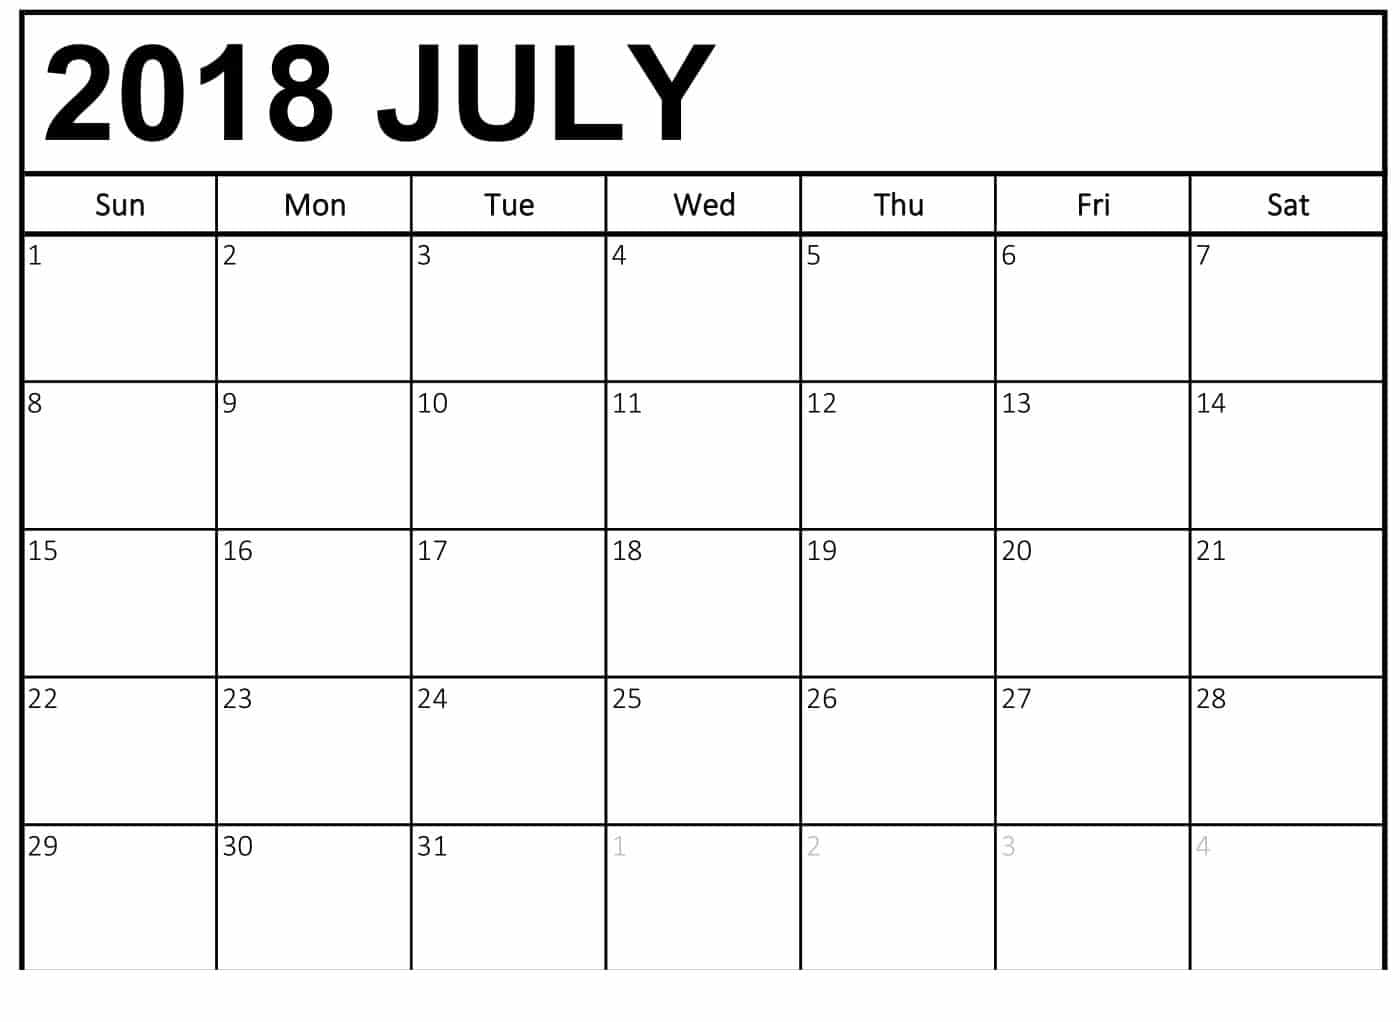 free-printable-split-year-calendar-july-2018-oppidan-library